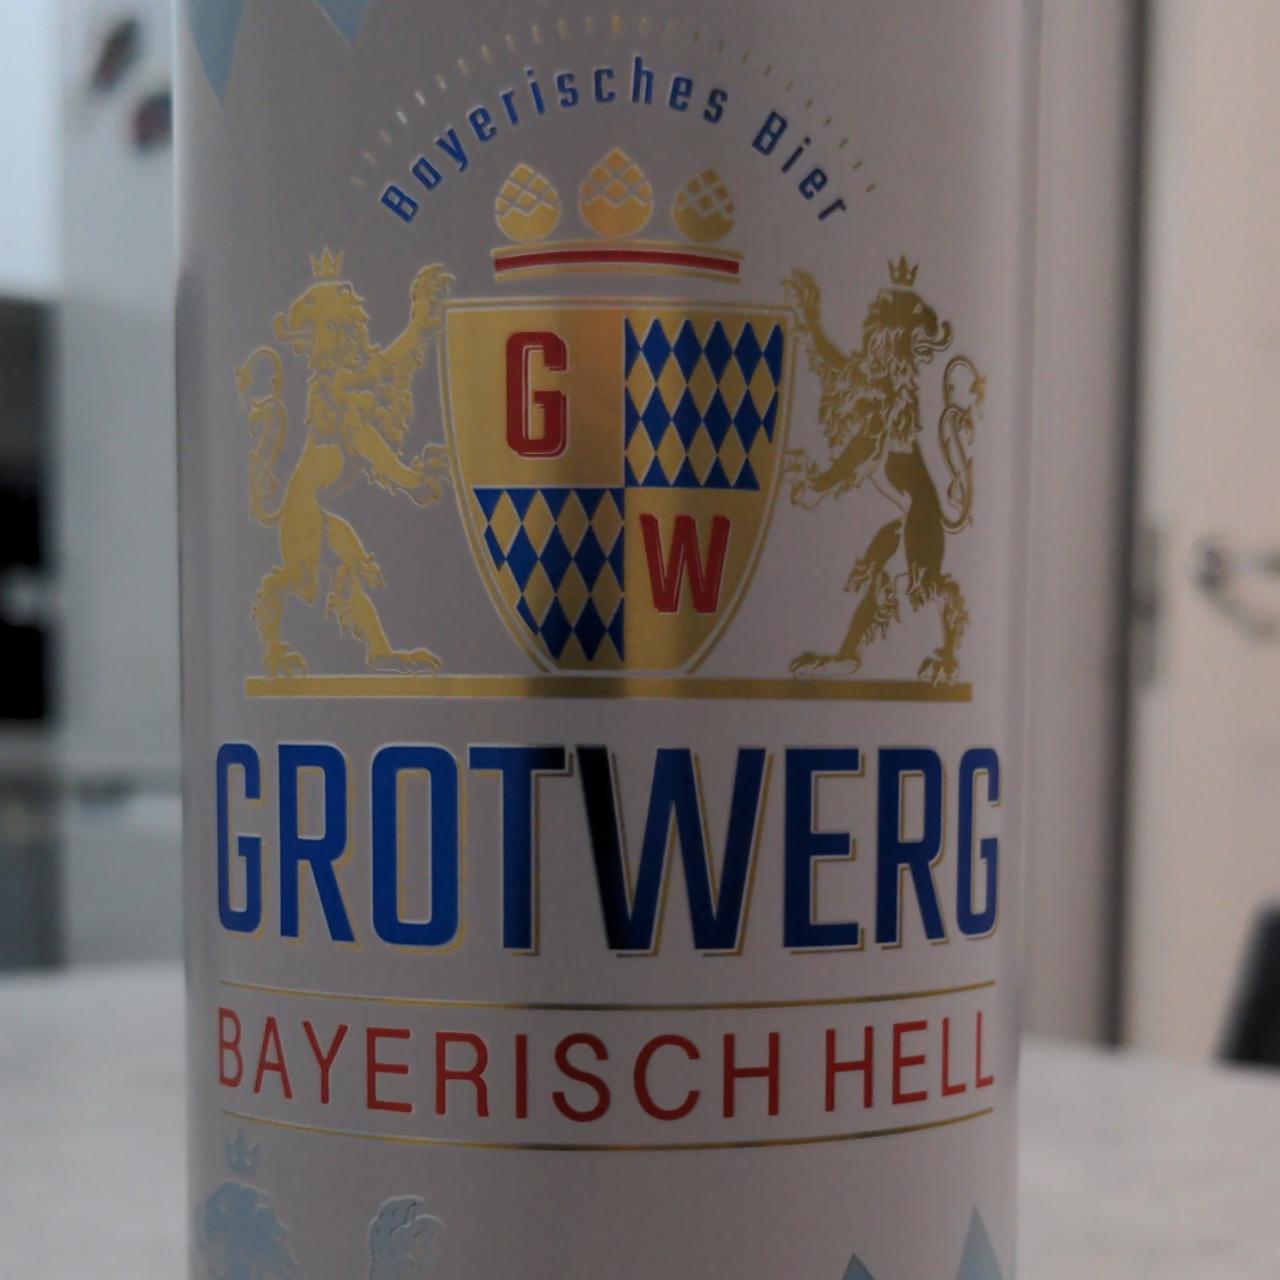 Фото - пиво Grotwerg Bayerisch Hell